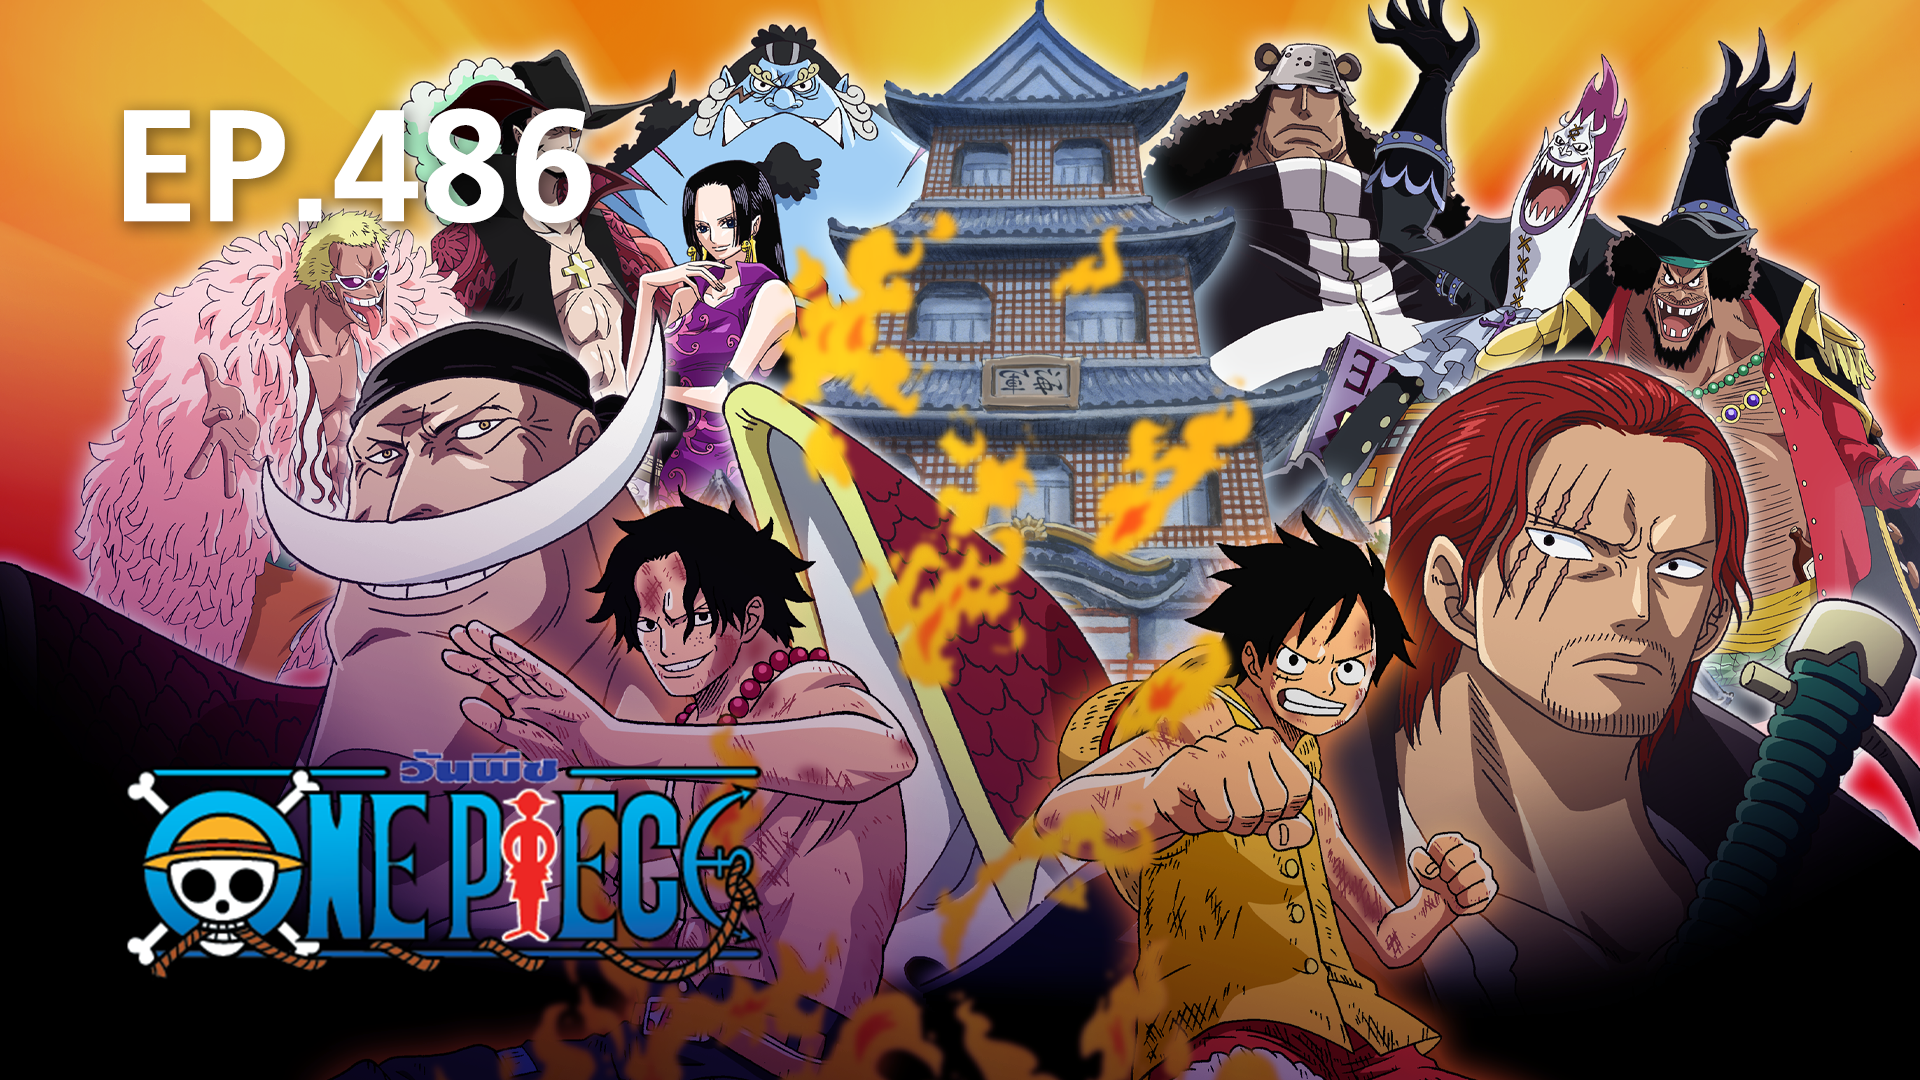 Ep 486 One Piece Watch Series Online